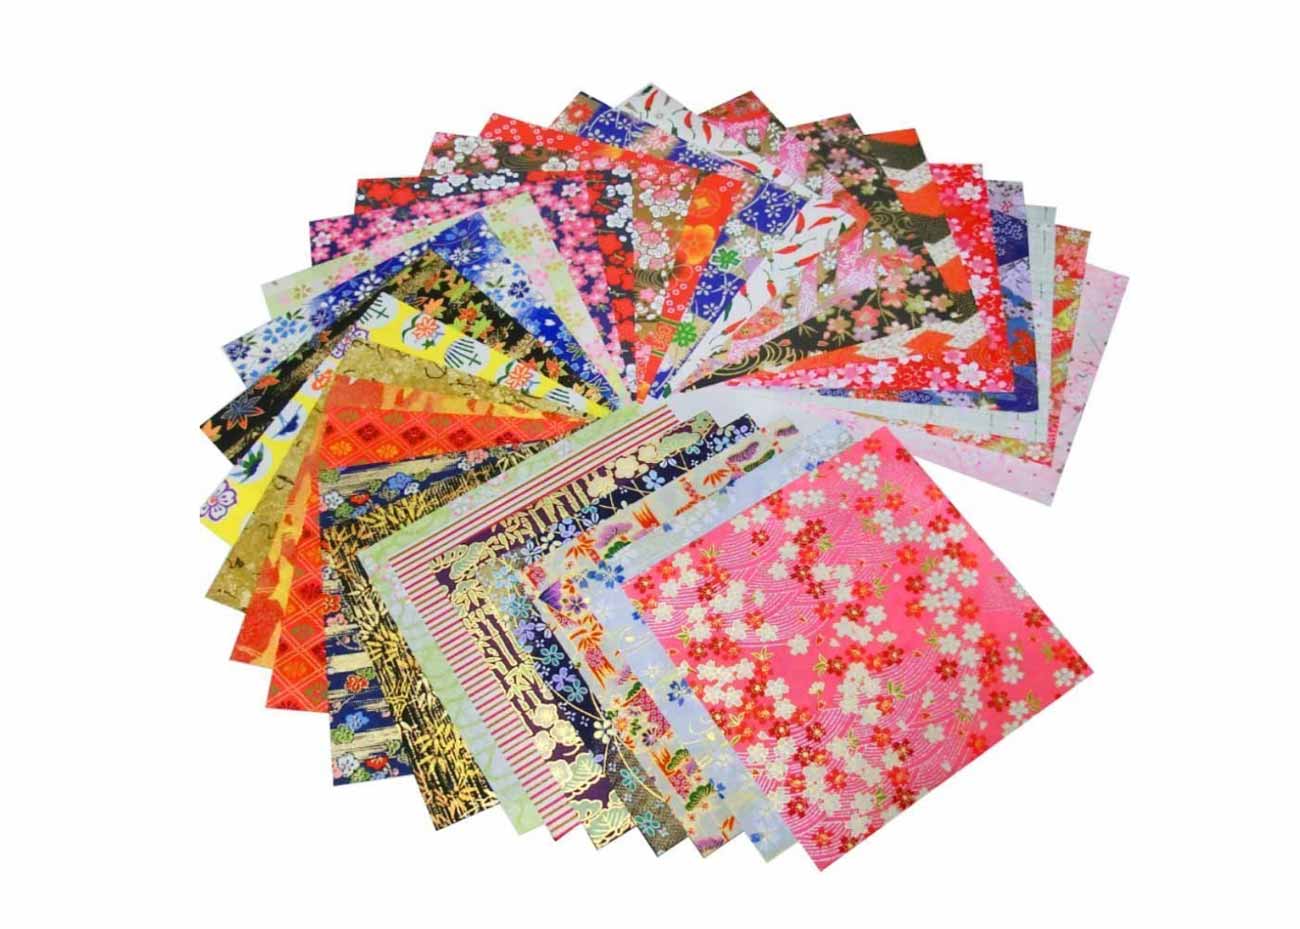 Yuzen Kimono Pattern Origami Paper Available at Amazon